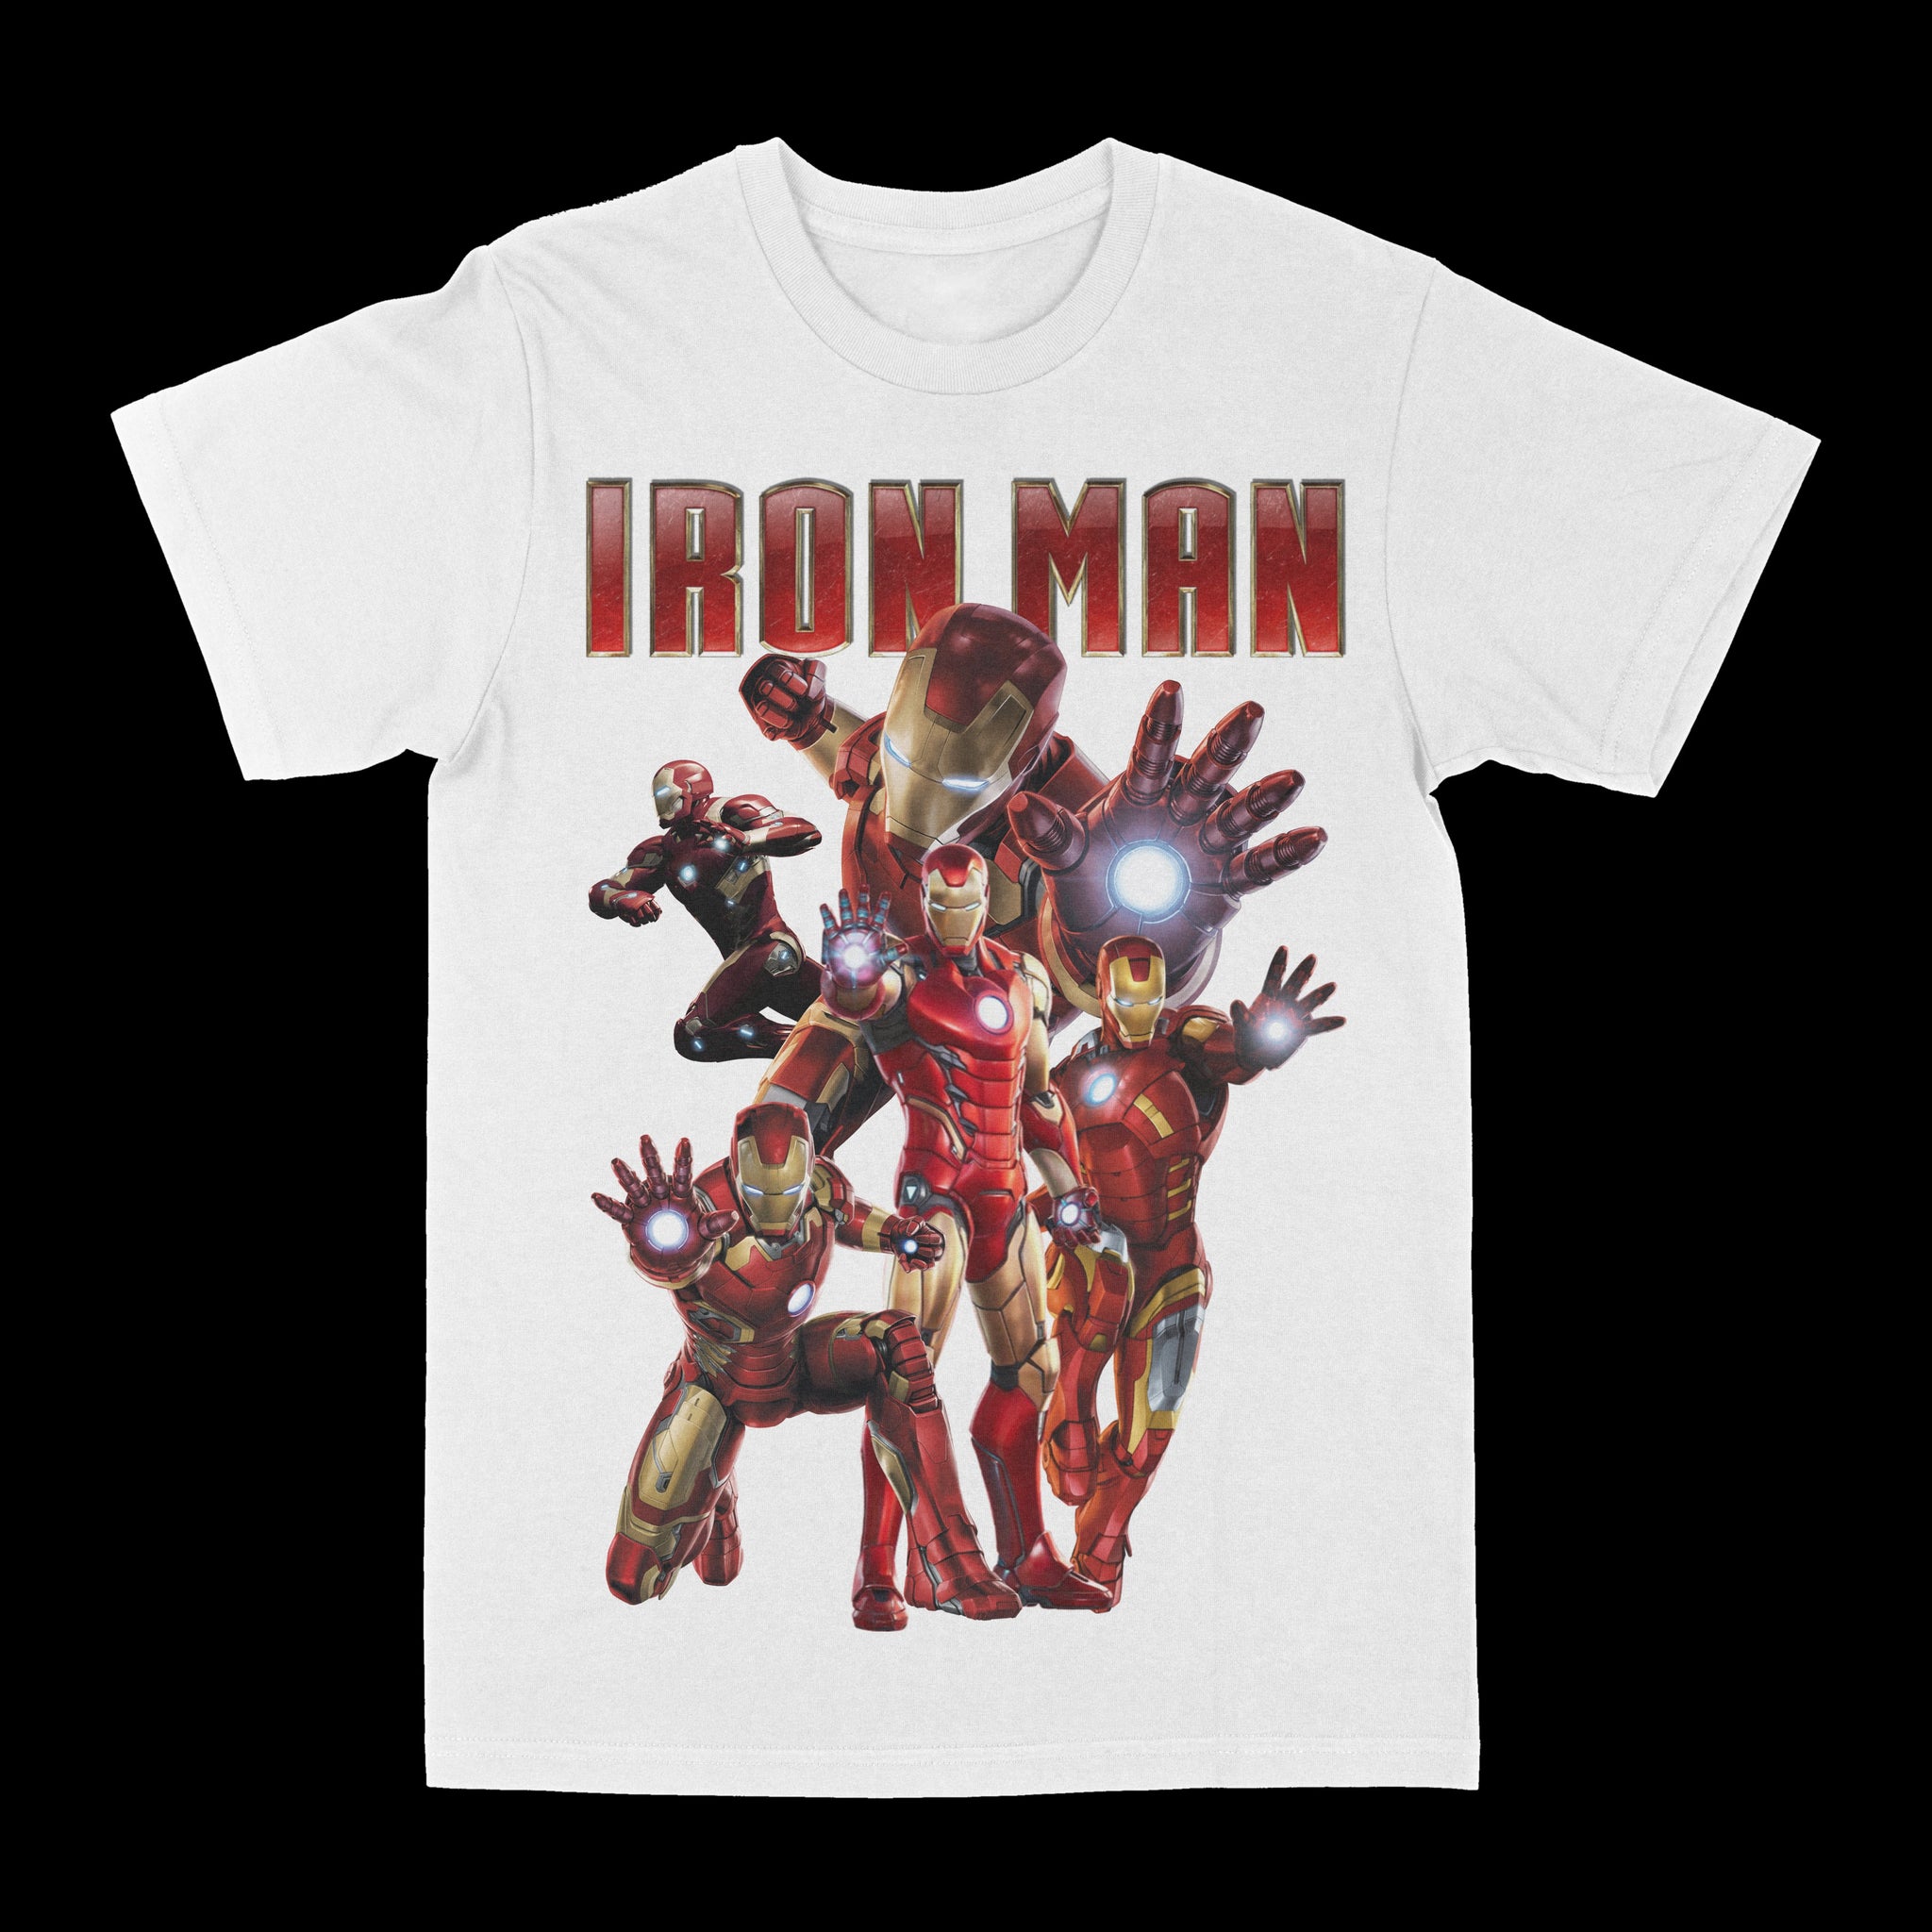 Iron Man Graphic Tee